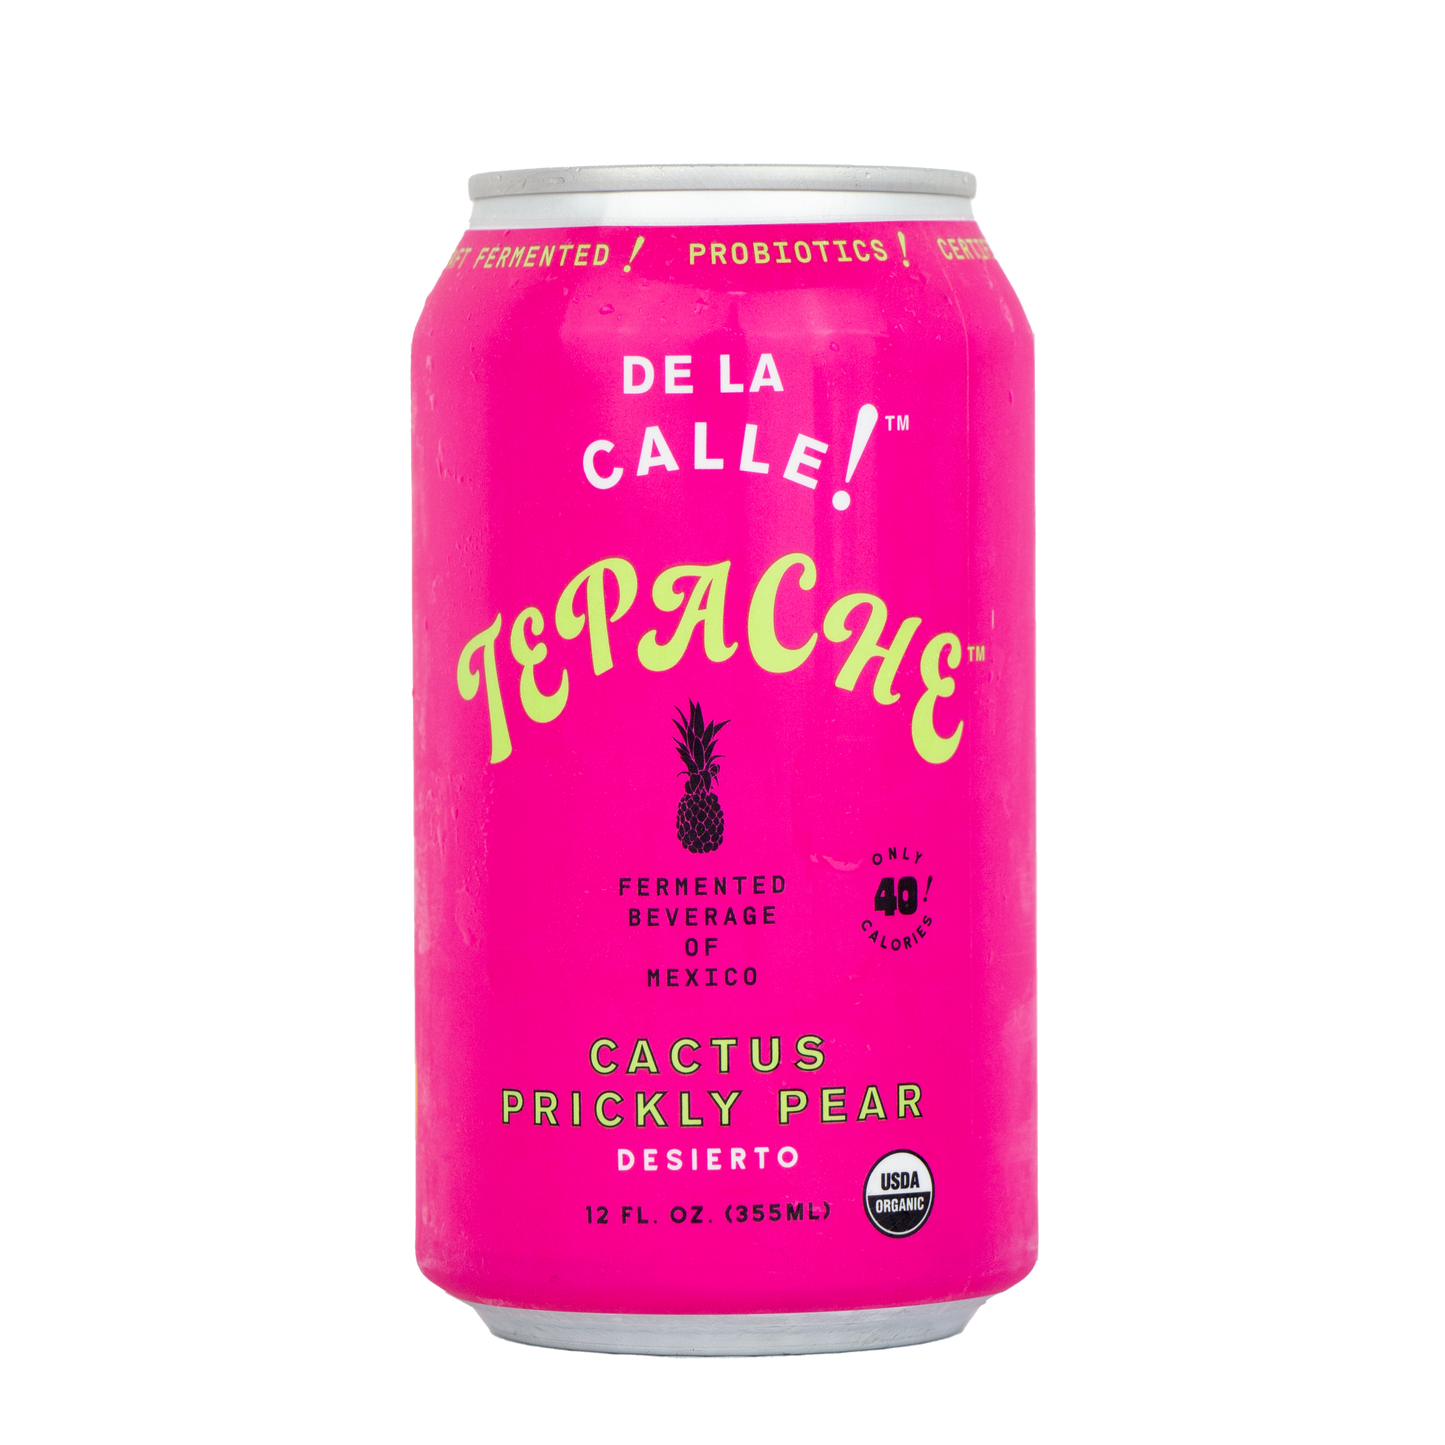 De la Calle! Tepache - Cactus Prickly Pear